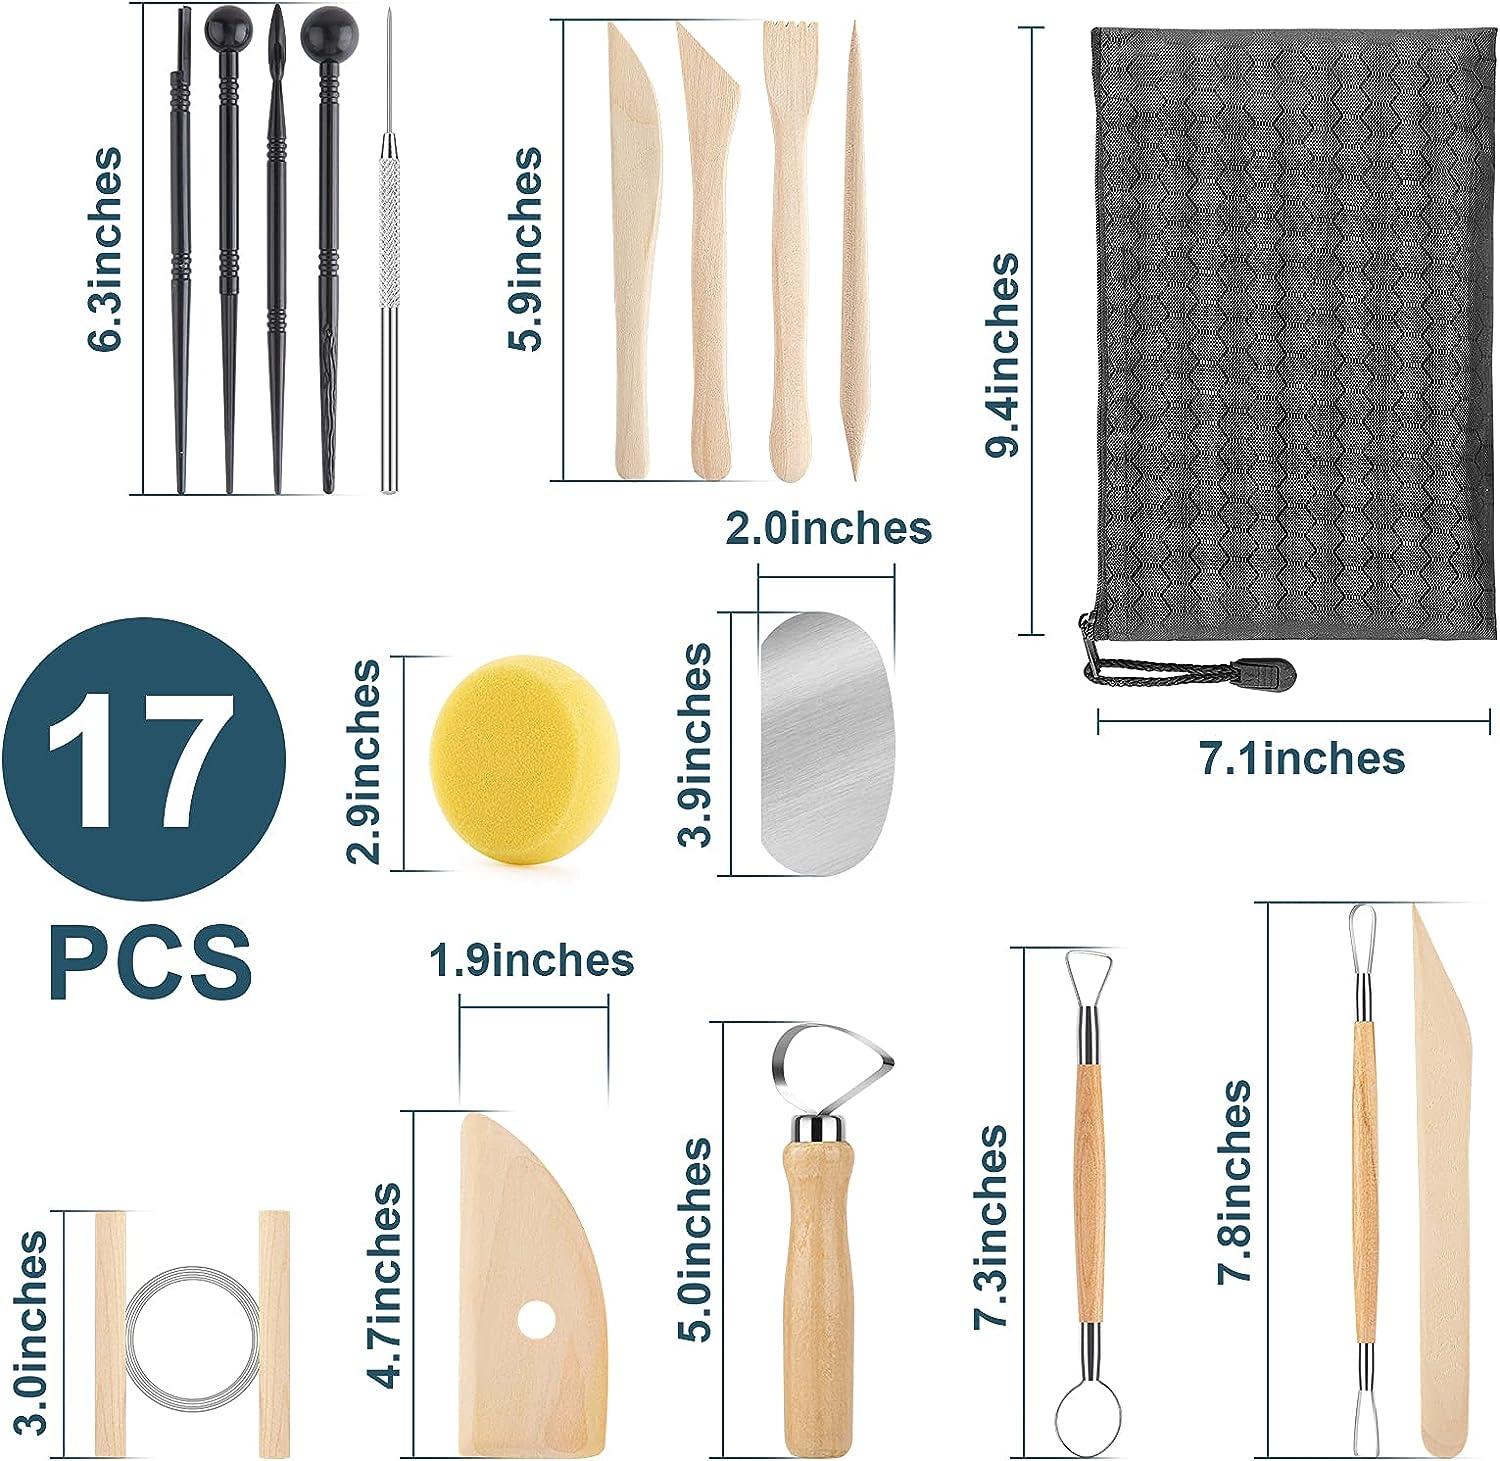 18 Pcs Pottery Tools, Ceramic Tools for Pottery, Ceramics Clay Sculpting Tools Kits, Double Sided Polymer Clay Tools, Ceramic Clay Carving Tool Set